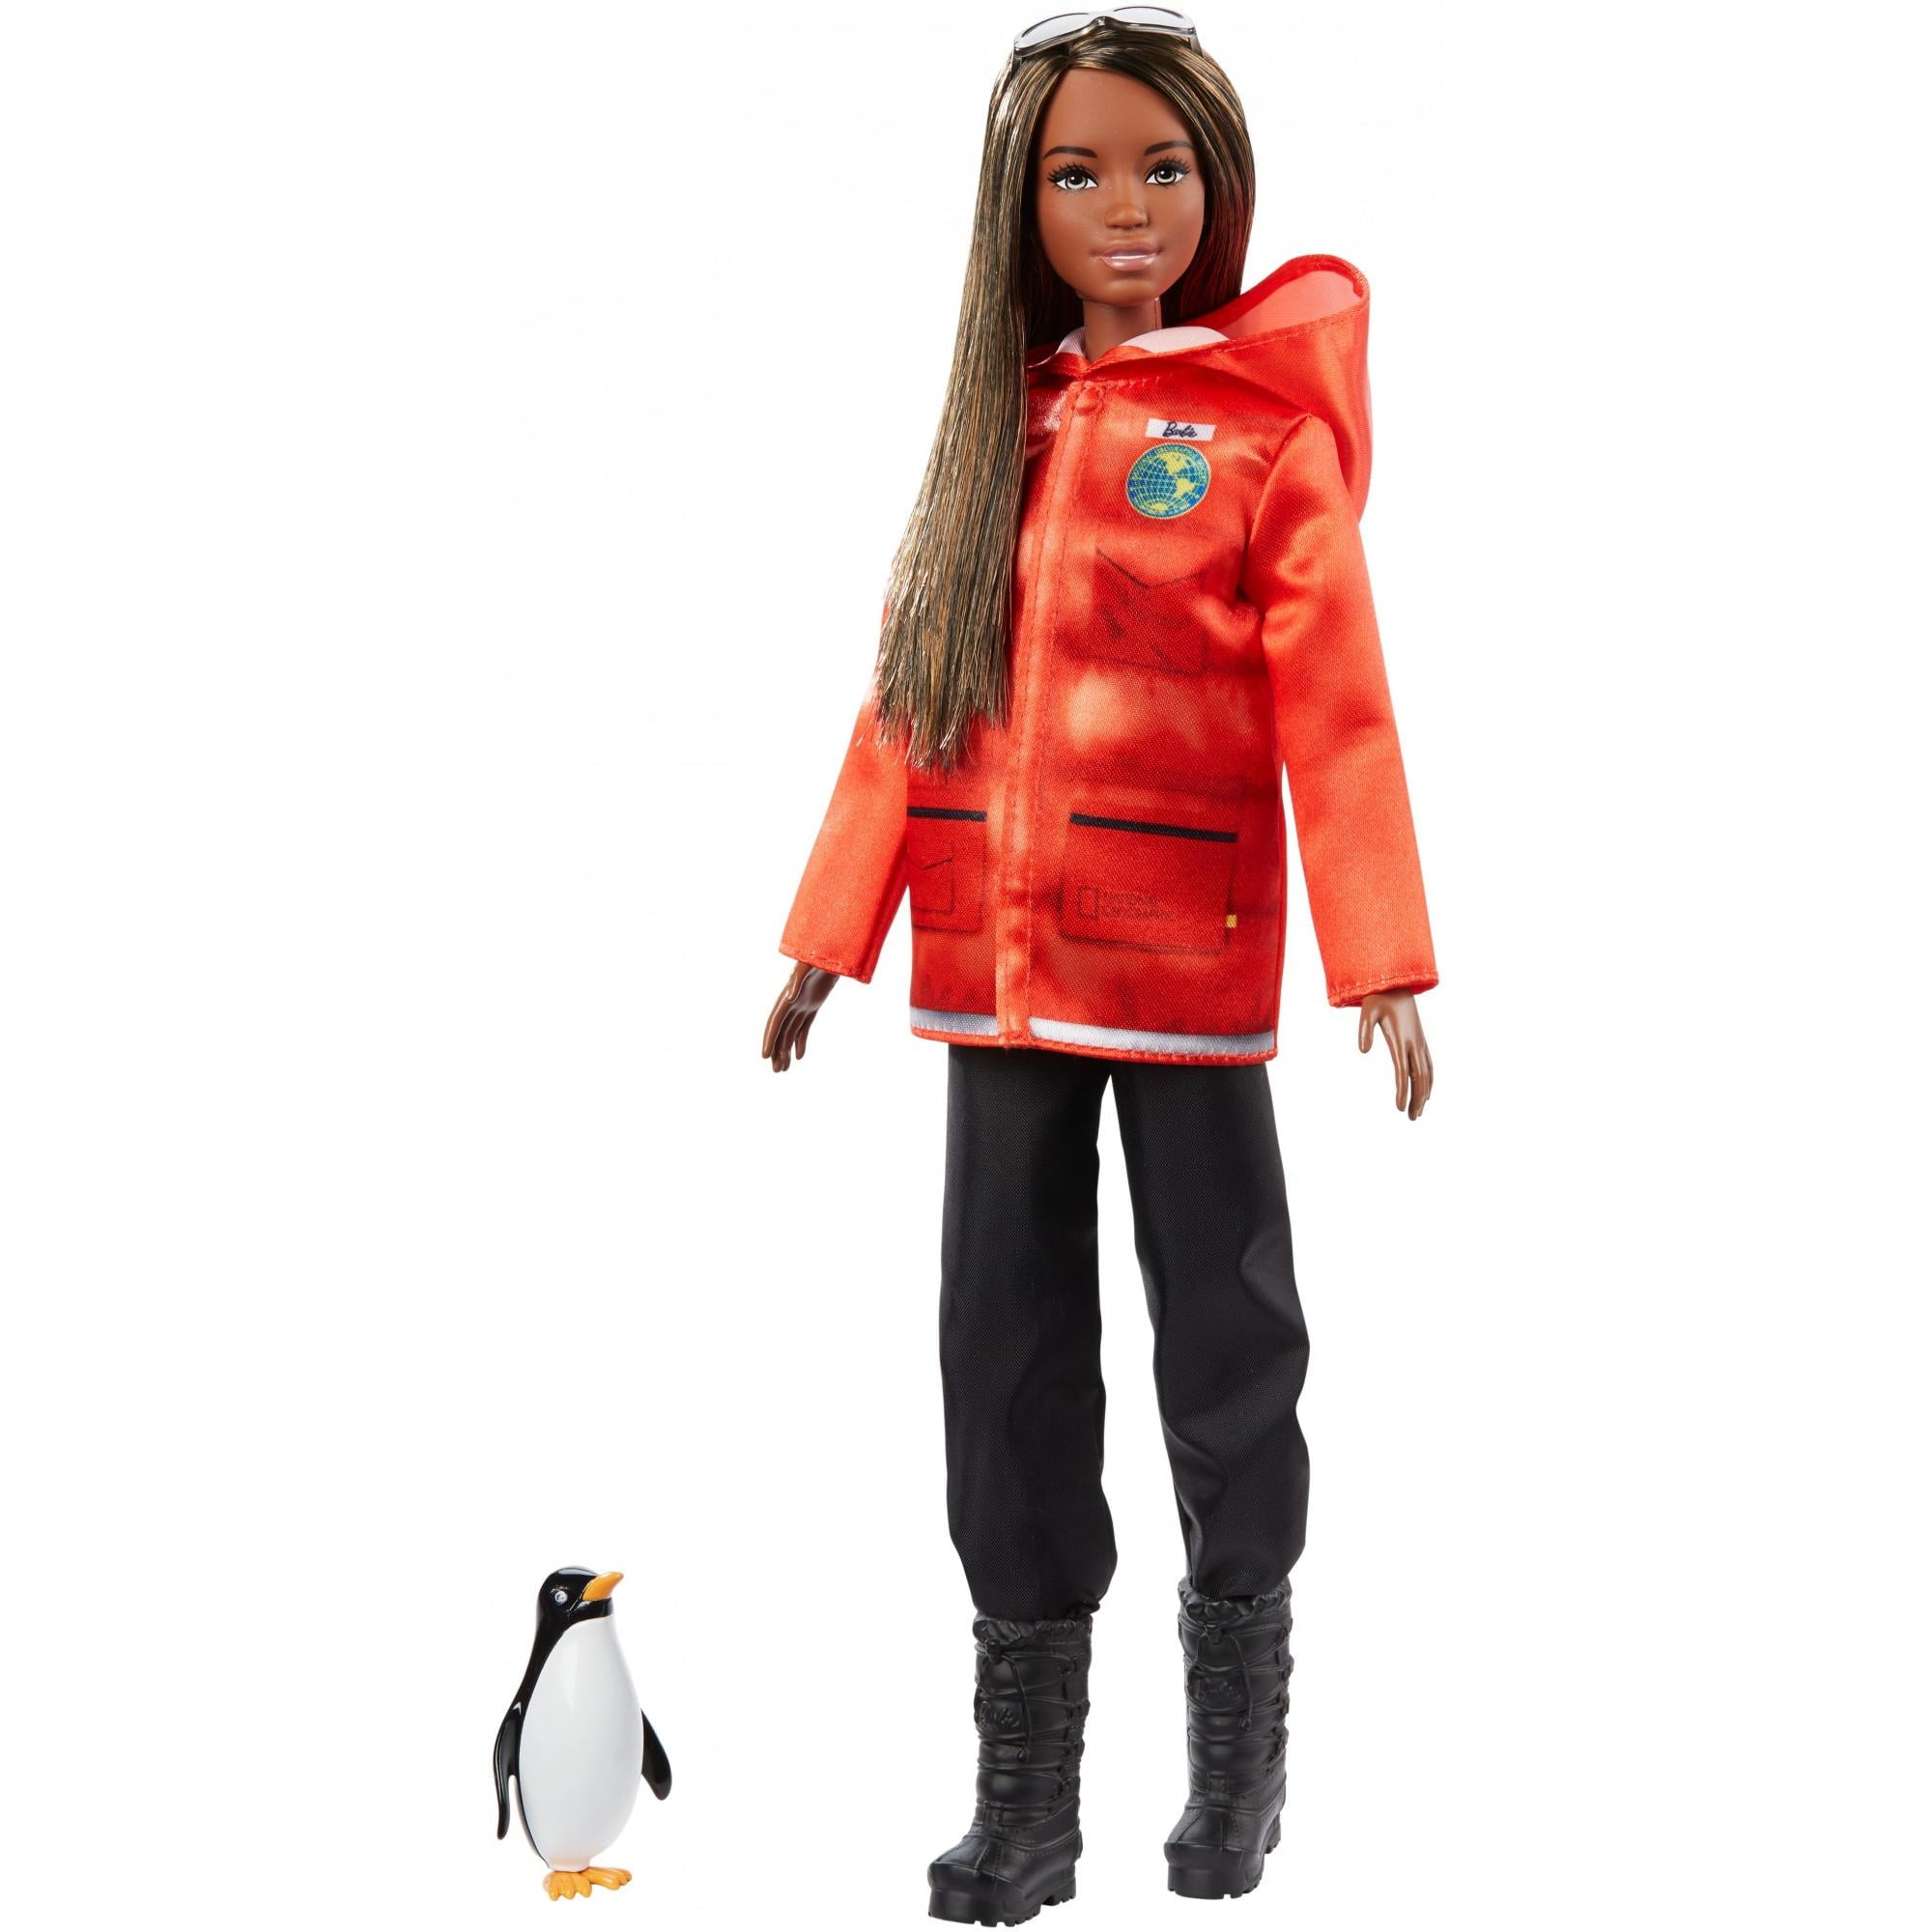 National Geographic Barbie 2018 Mattel Ages 3 Plus Polar Marine Biologist for sale online 